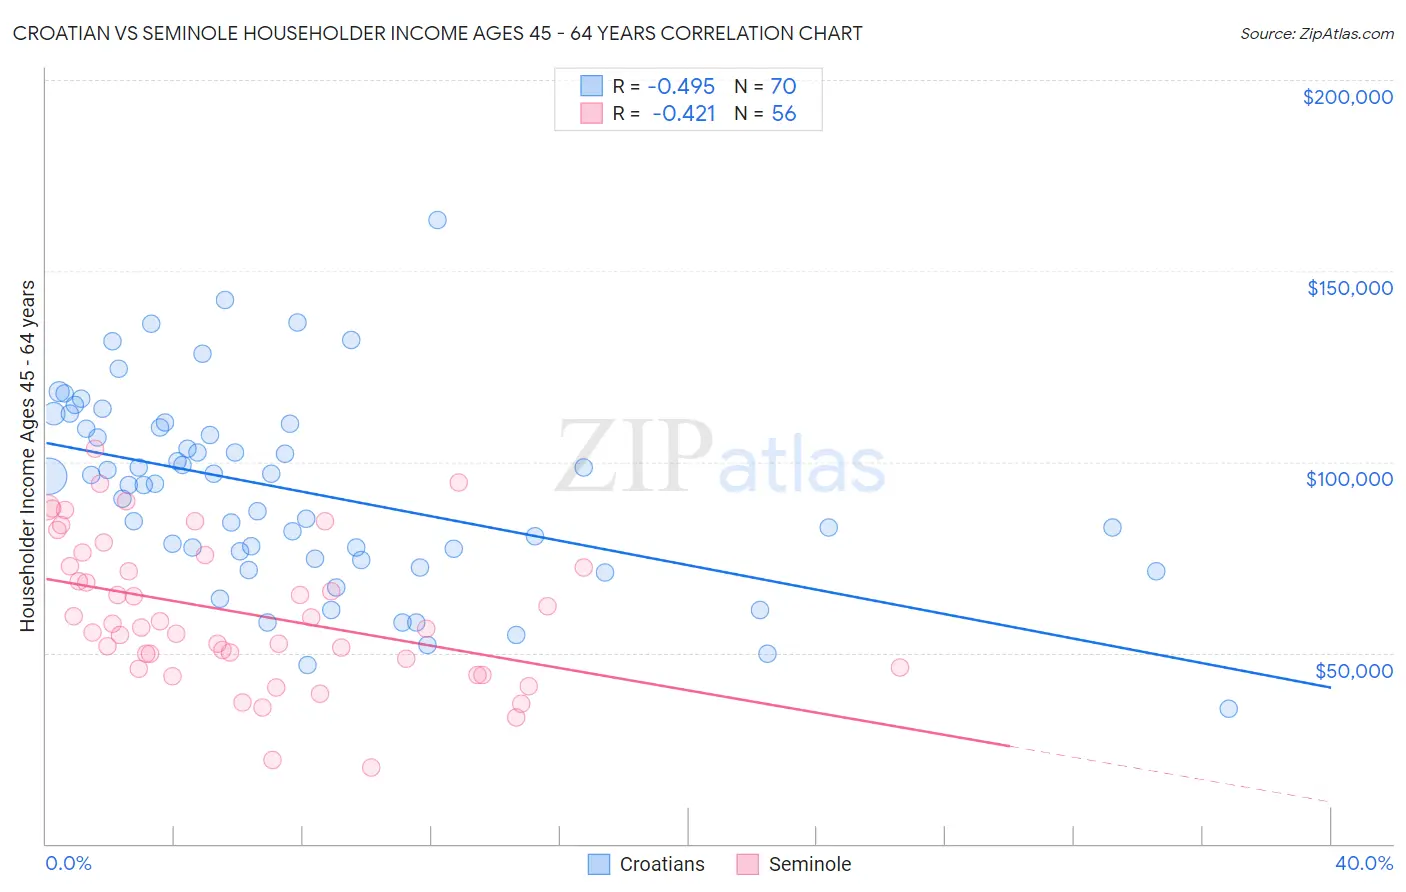 Croatian vs Seminole Householder Income Ages 45 - 64 years